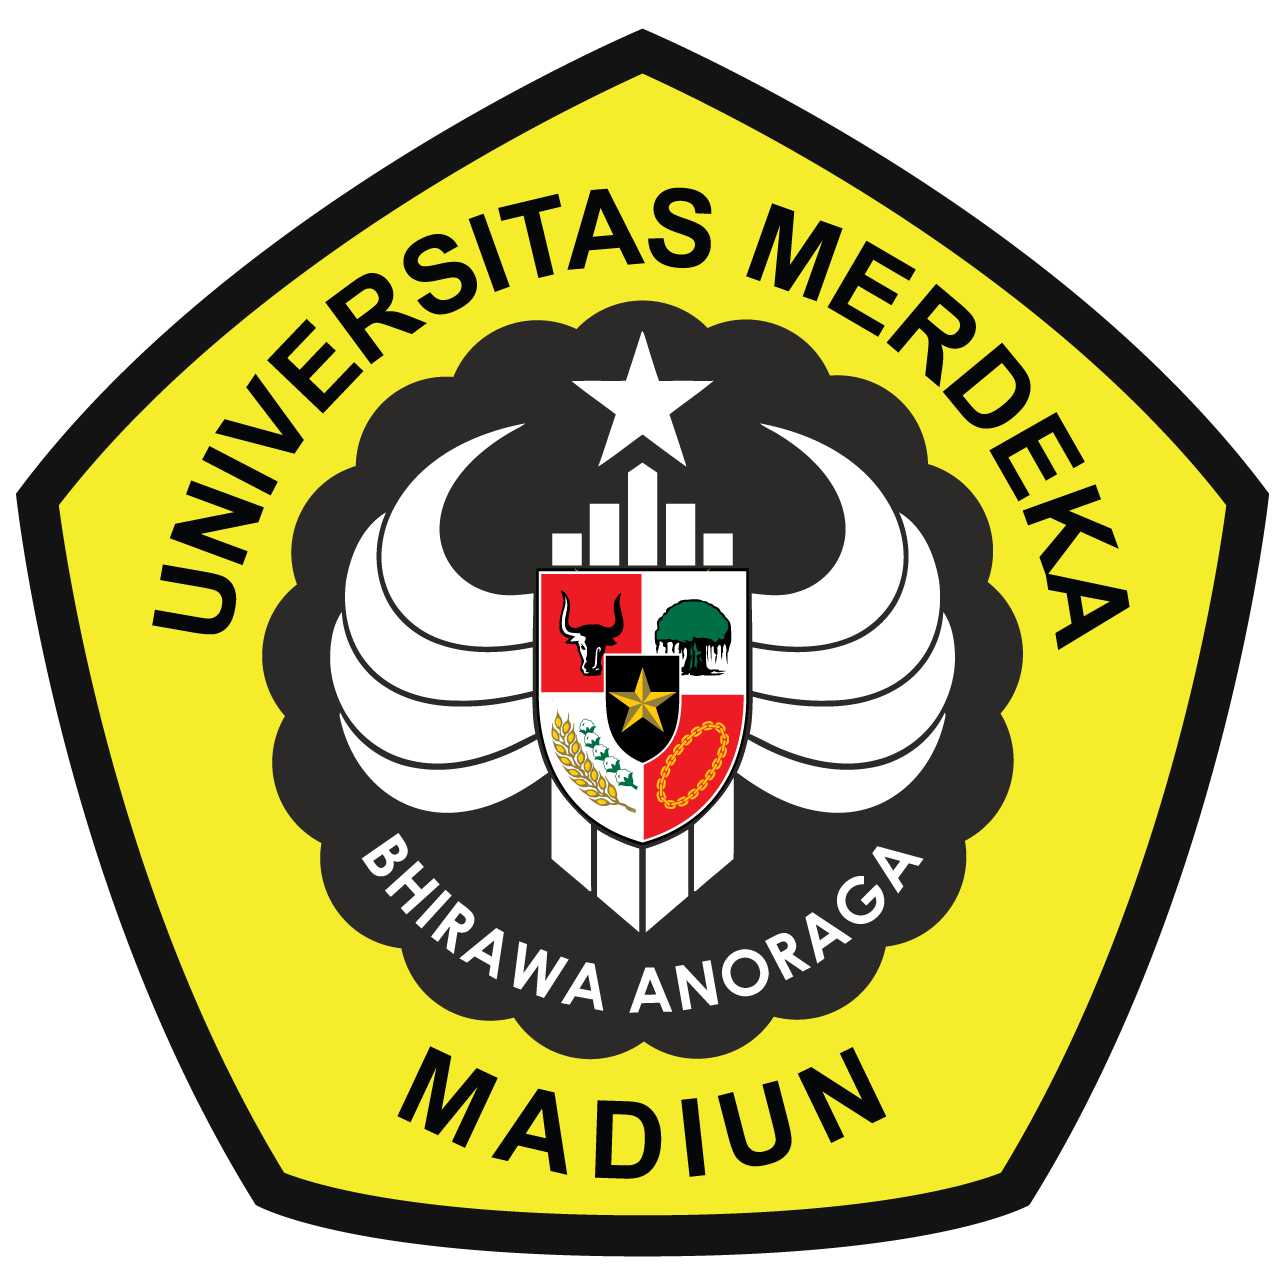 Logo Universitas Merdeka Madiun Vector Cdr Ai Eps Png Hd Gudril Sexiz Pix